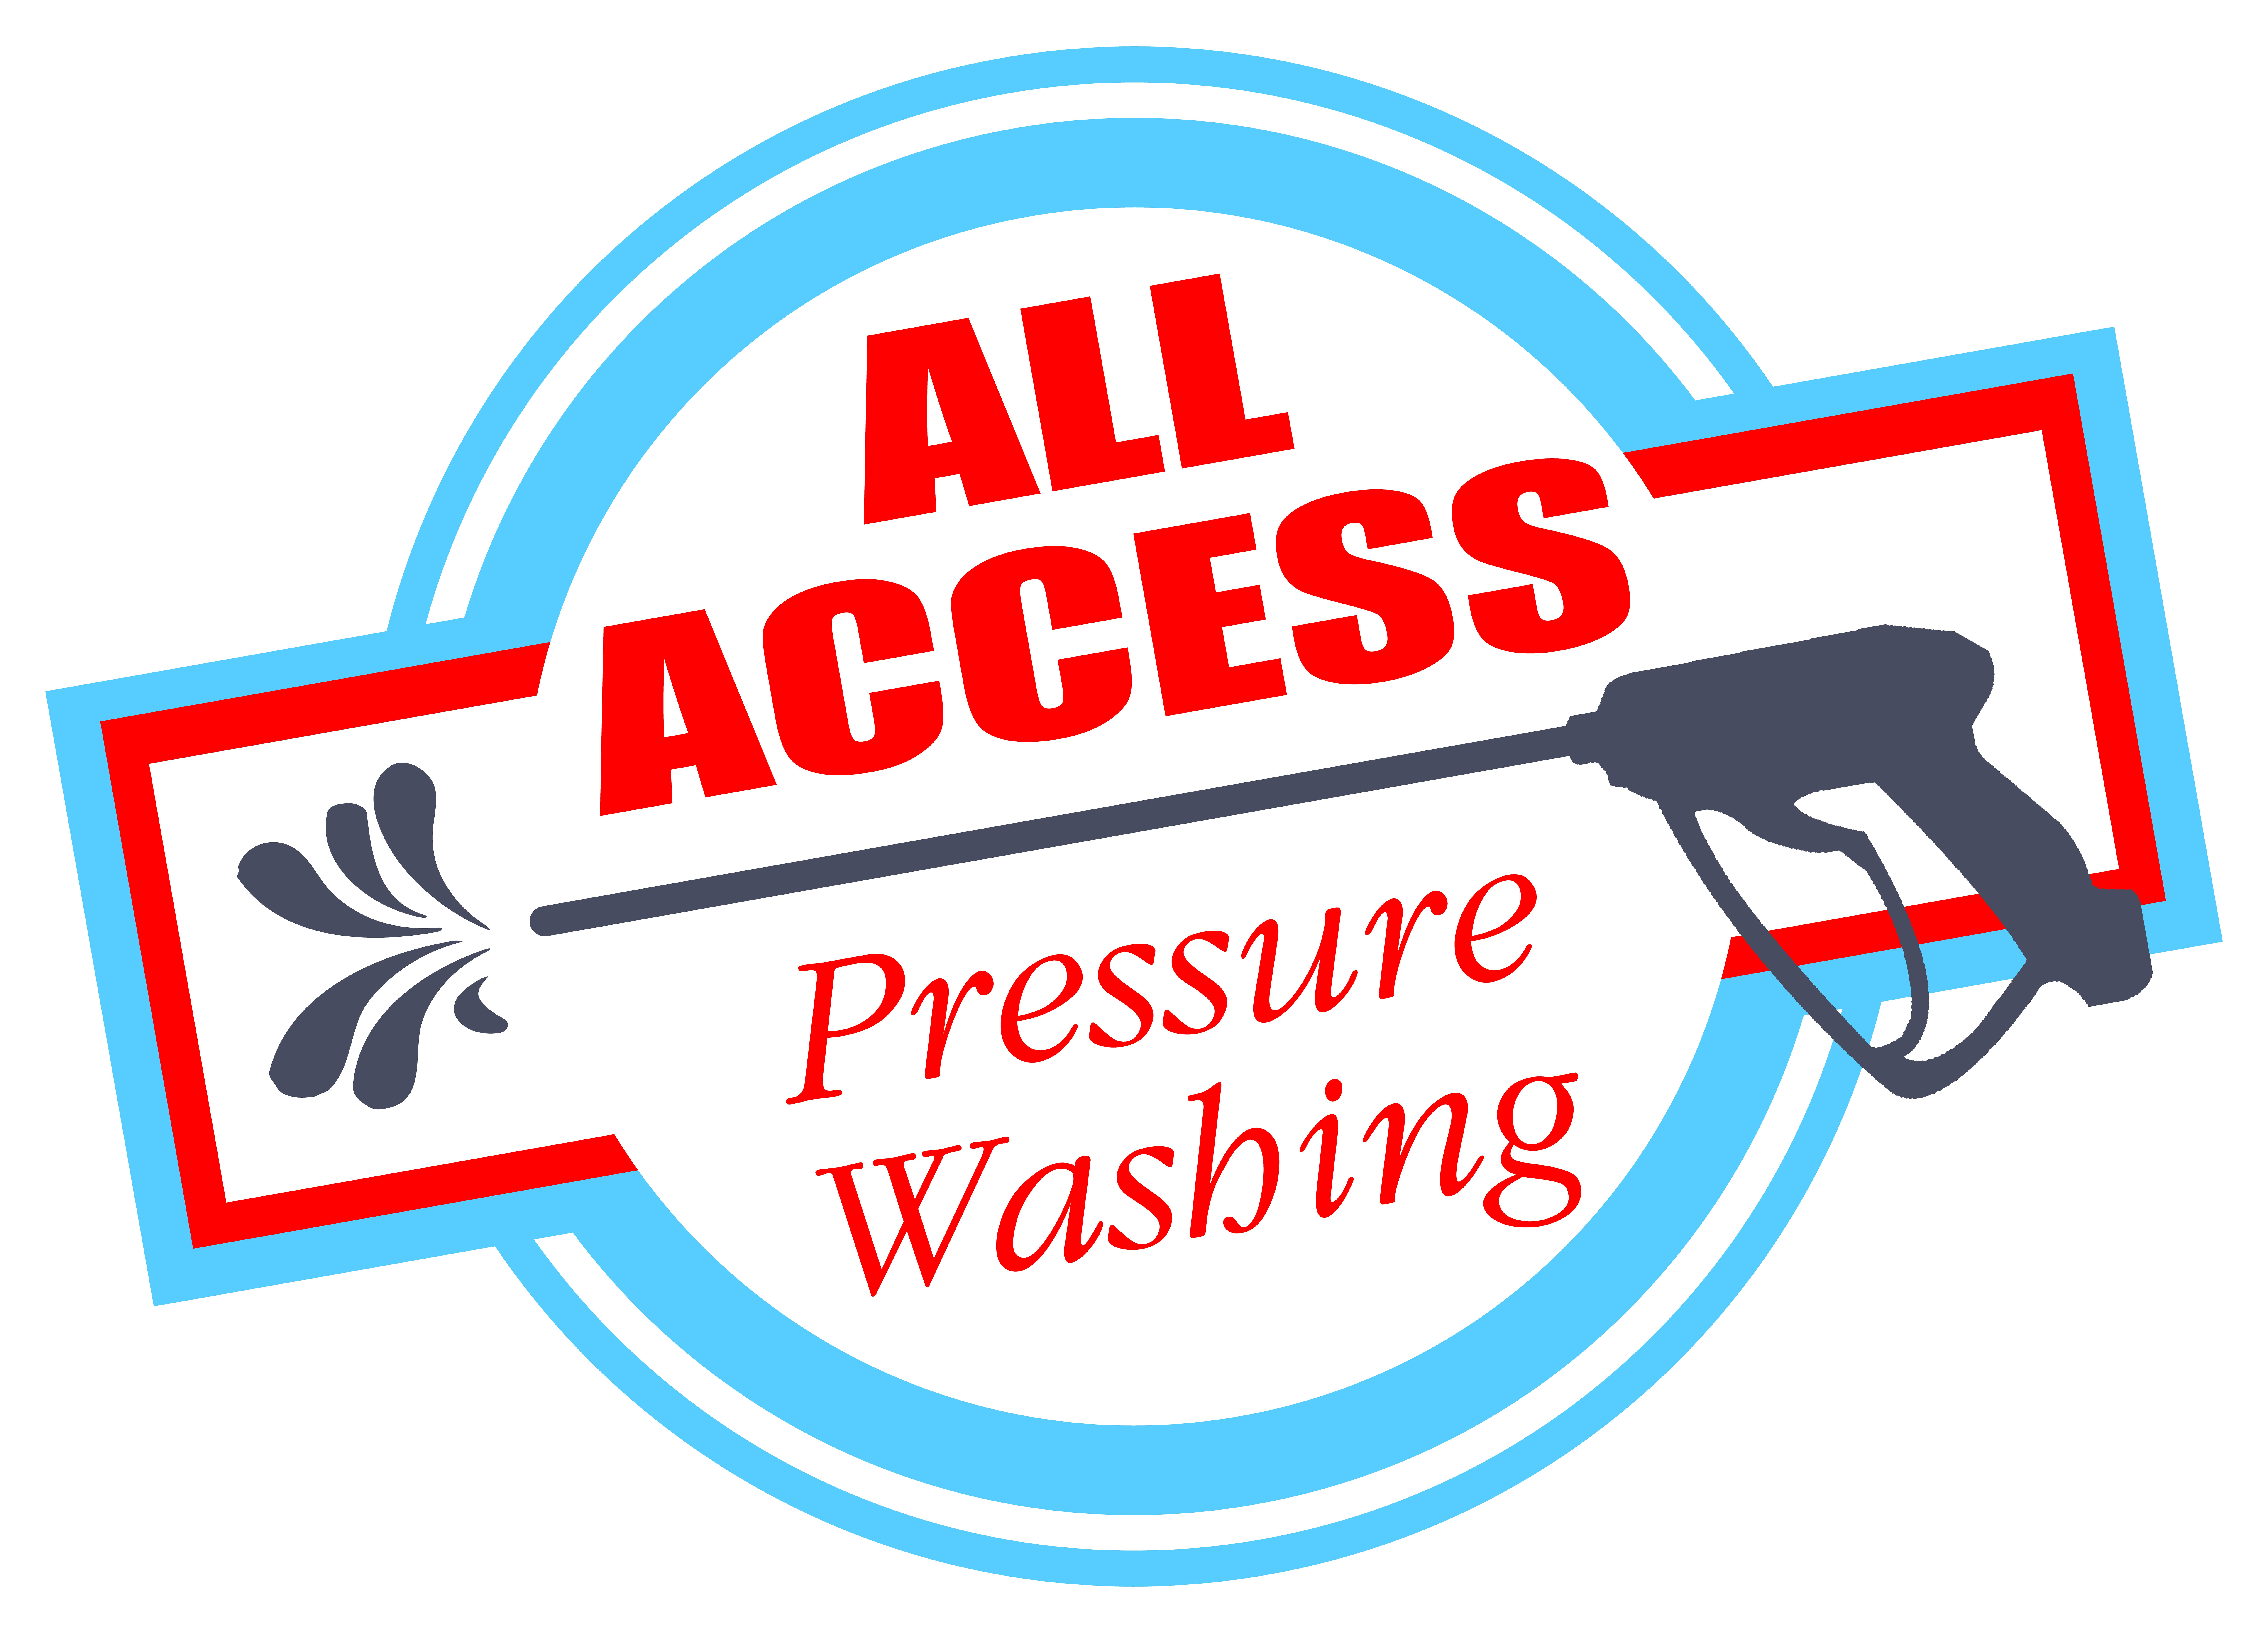 All Access Pressure Washing, LLC - Home  Facebook Logo